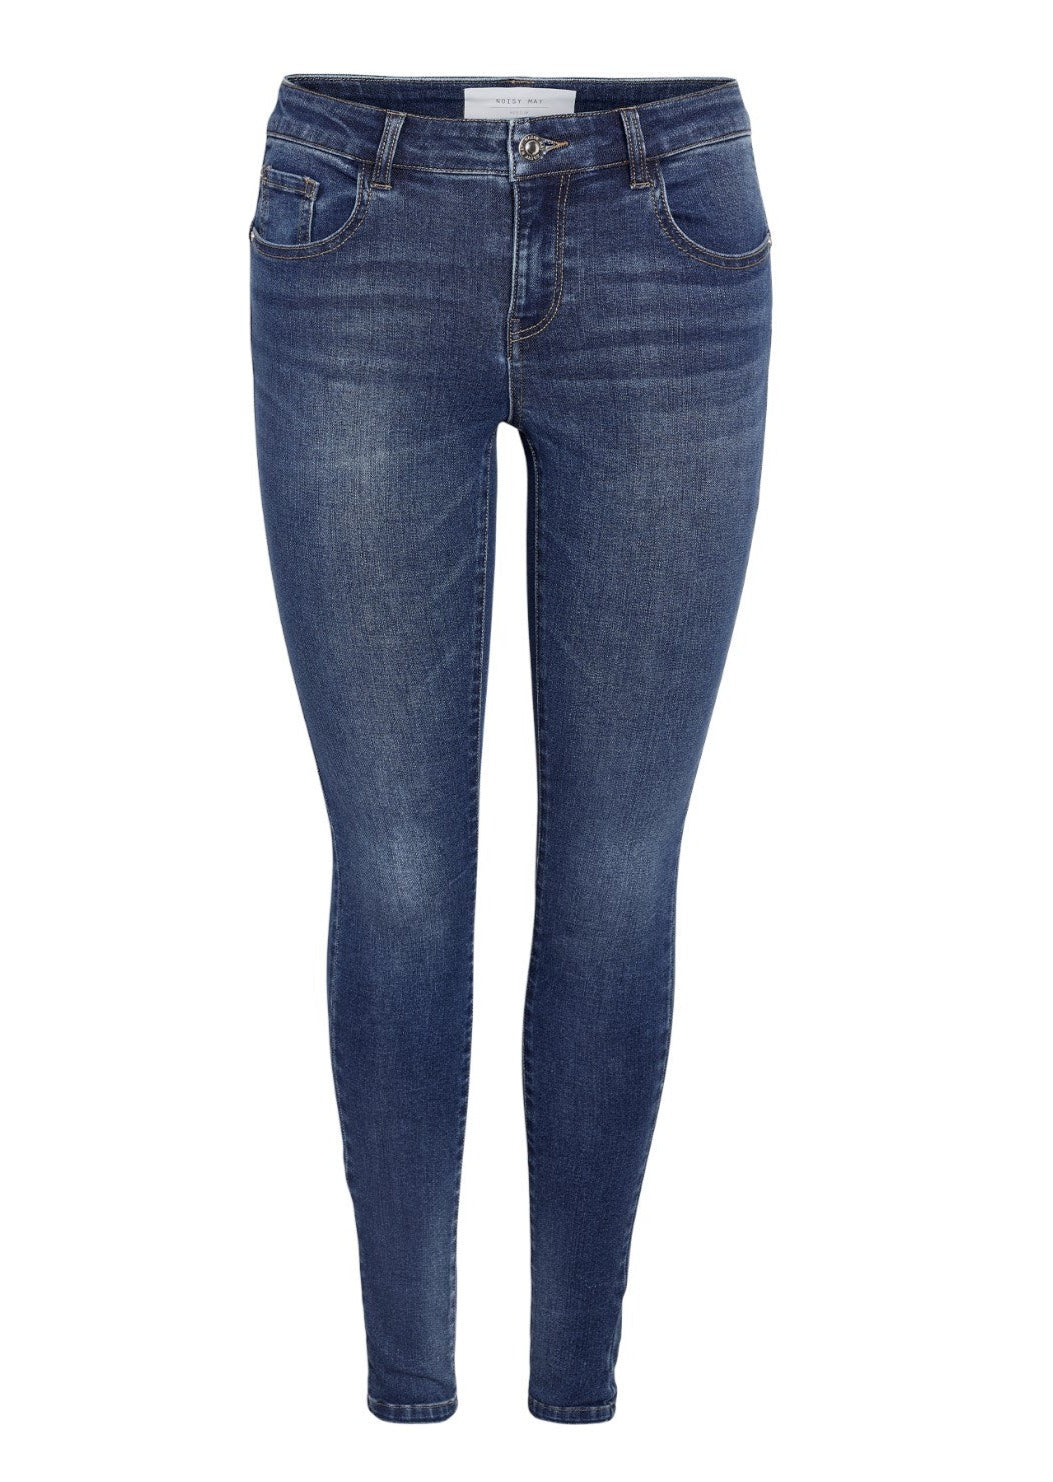 Jen Shaper Jeans - Blue - for kvinde - NOISY MAY - Jeans